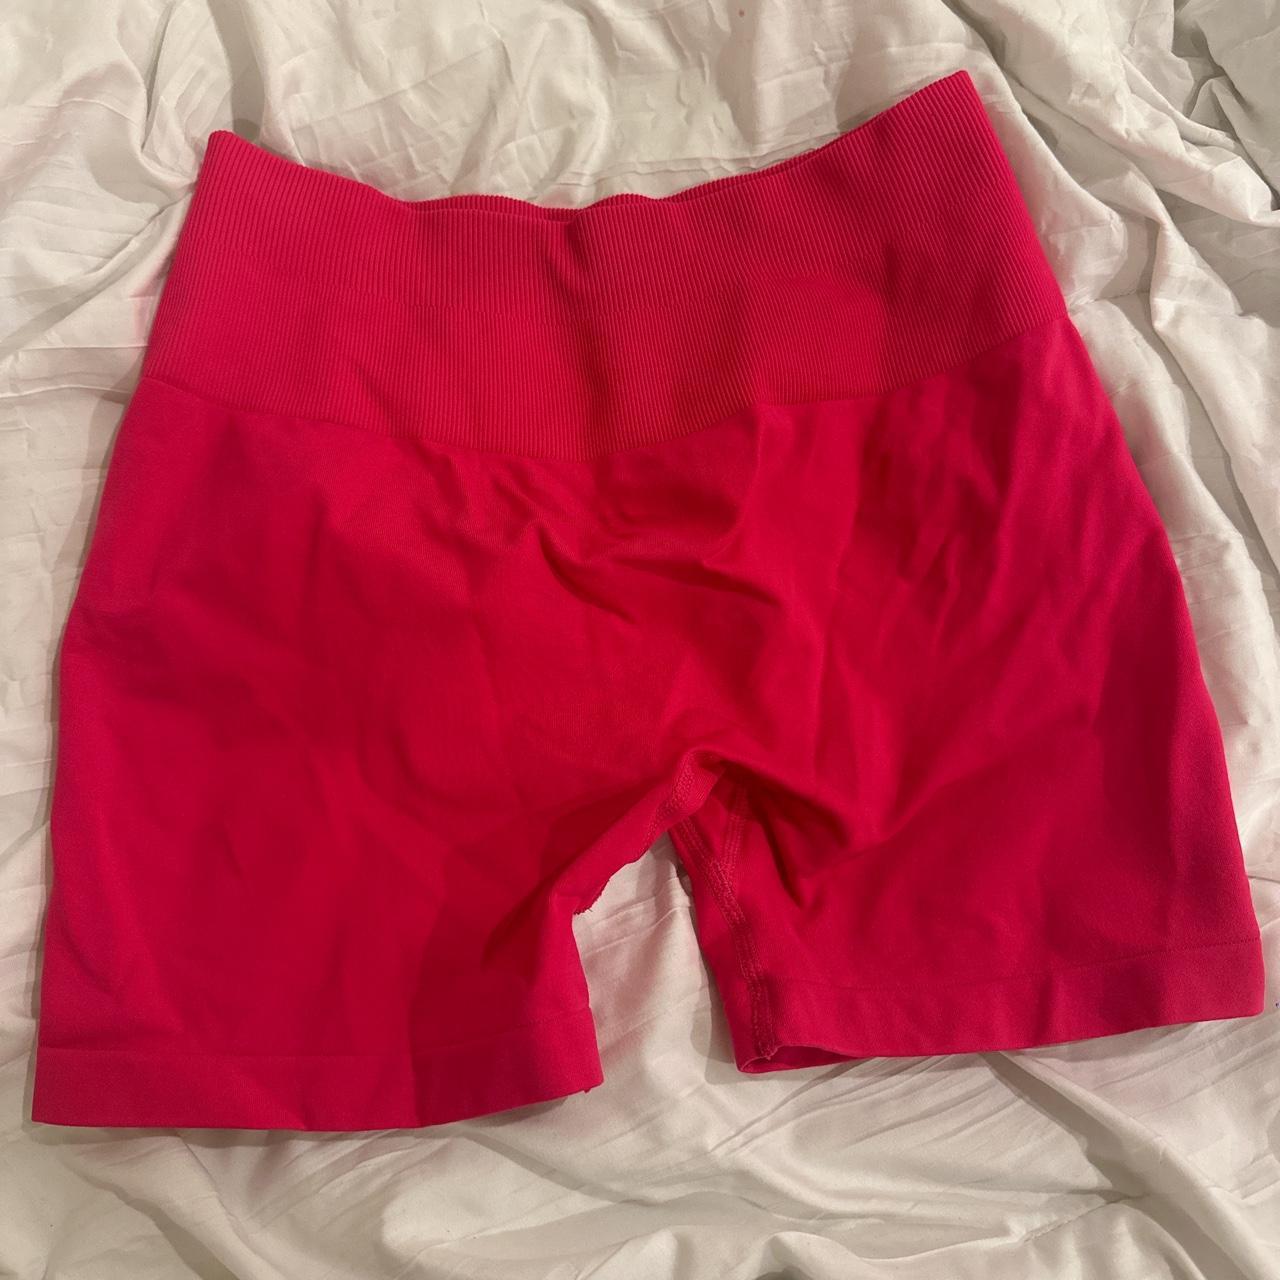 Aurola pink gym shorts size XS/S great - Depop